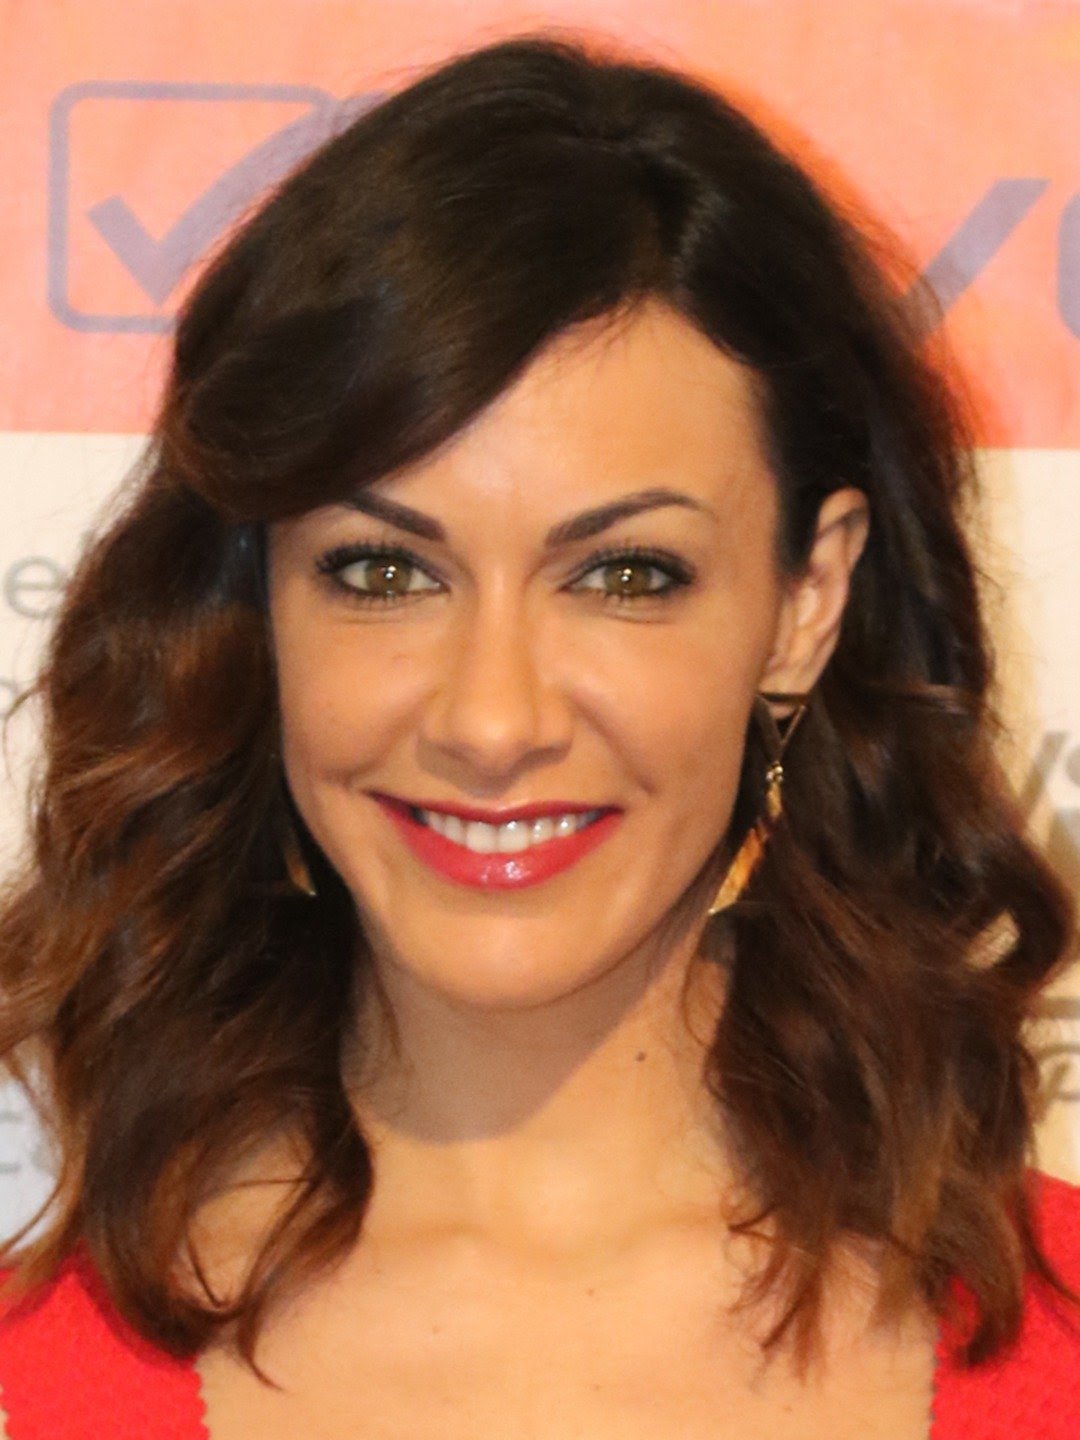 Melita Toniolo Italian Television Presenter, Model, Actress